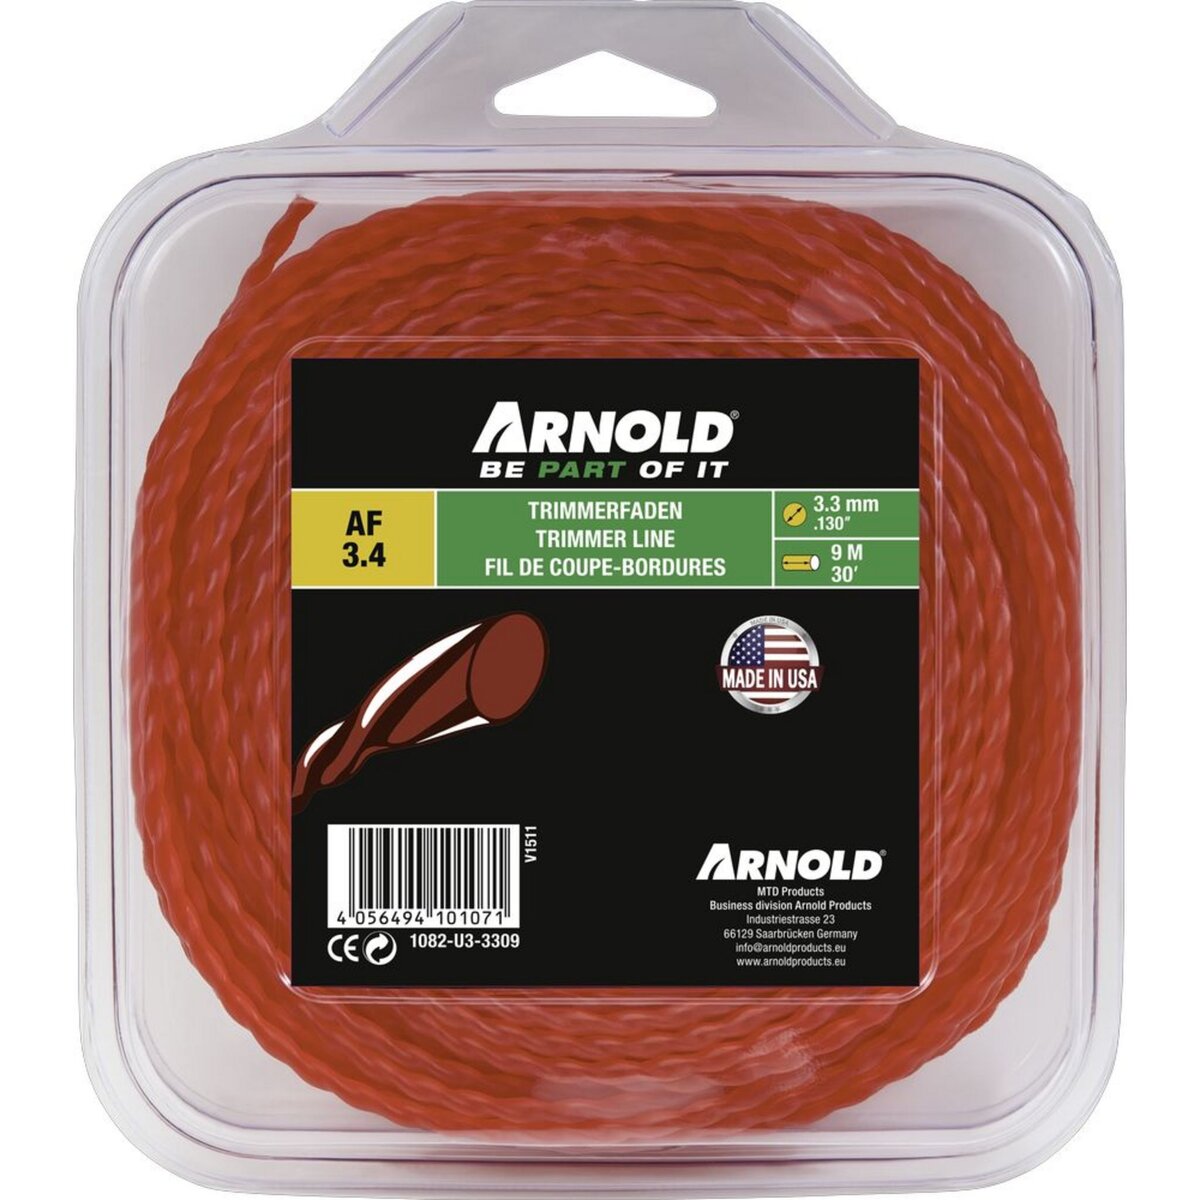 ARNOLD Fil de coupe-bordure rond en nylon torsadé rouge AF 3,4, 3,3 mm × 9 m